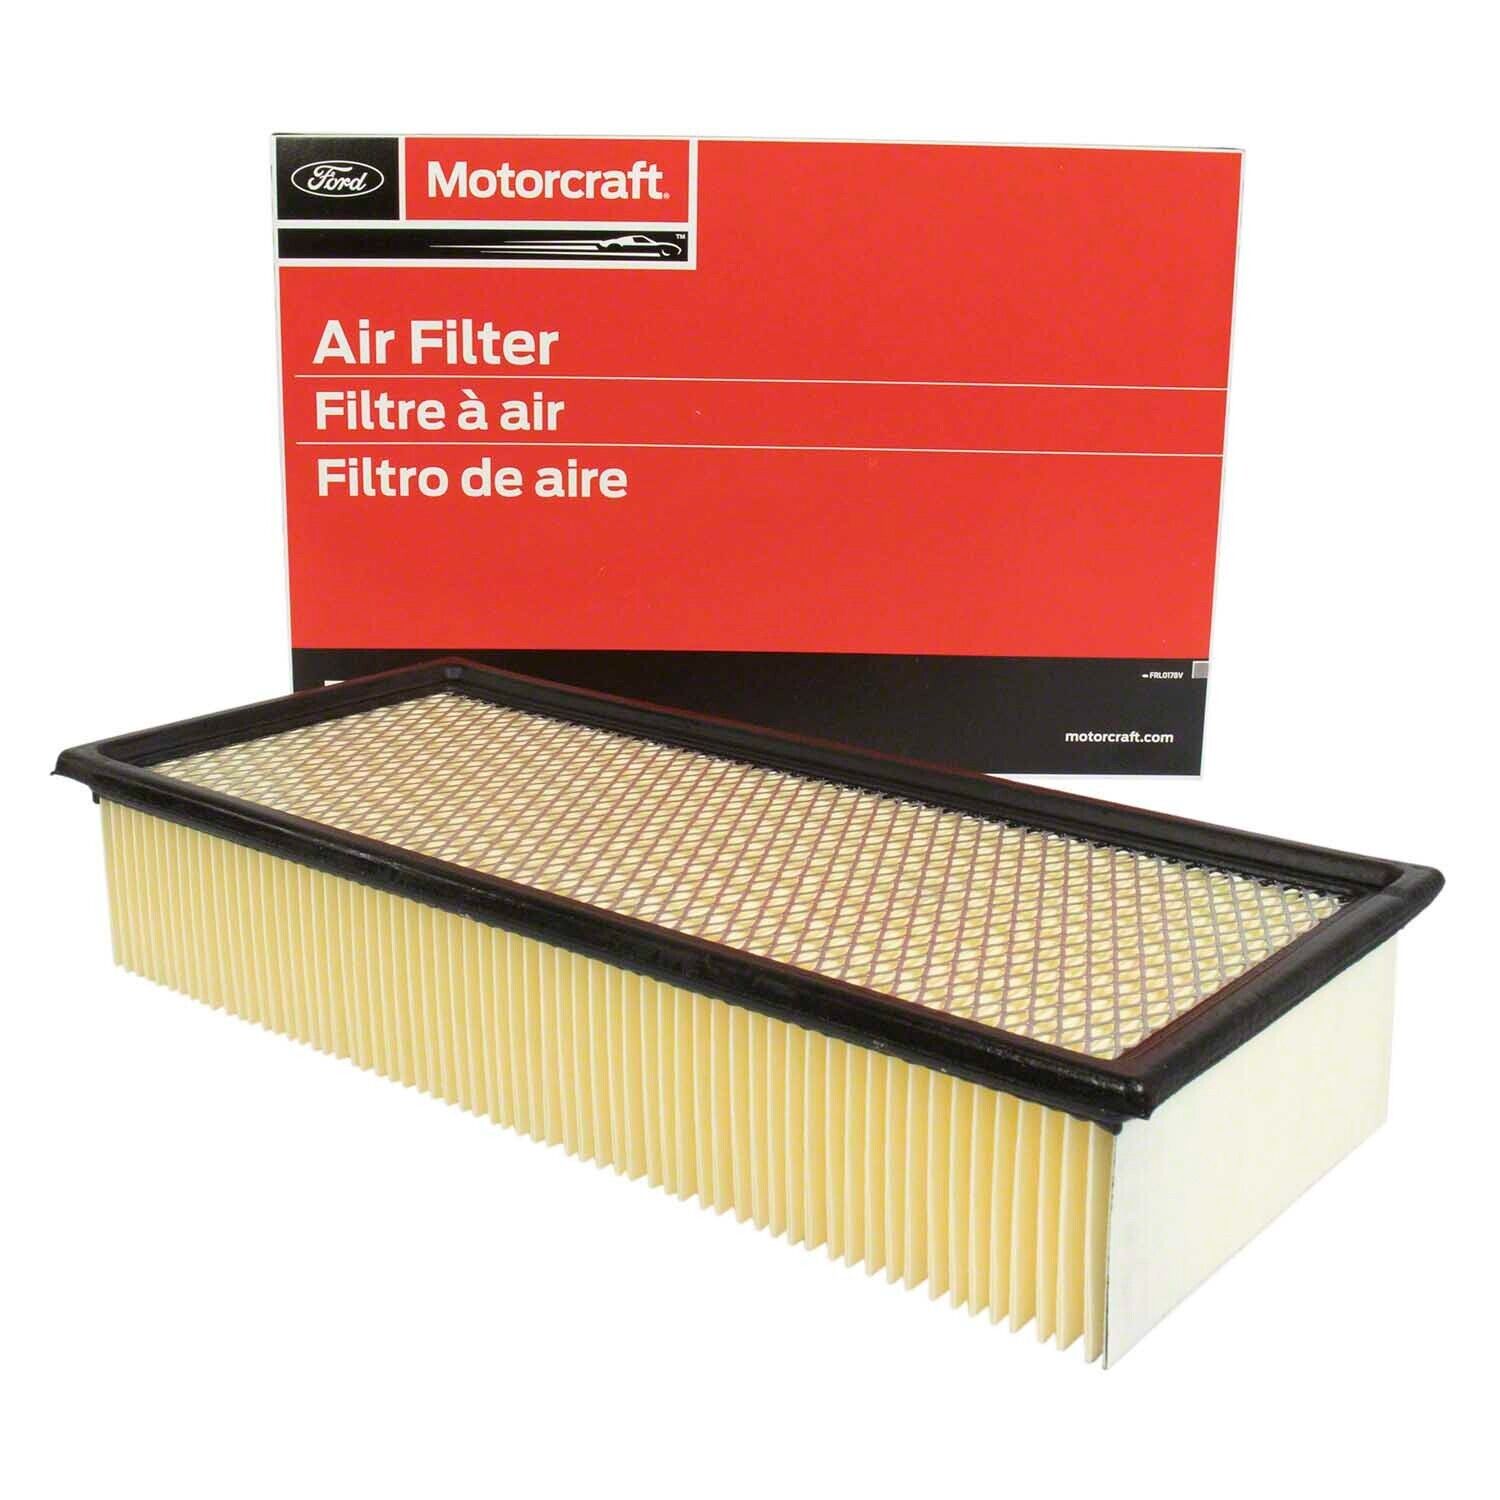 Air Filter Motorcraft FA-1782